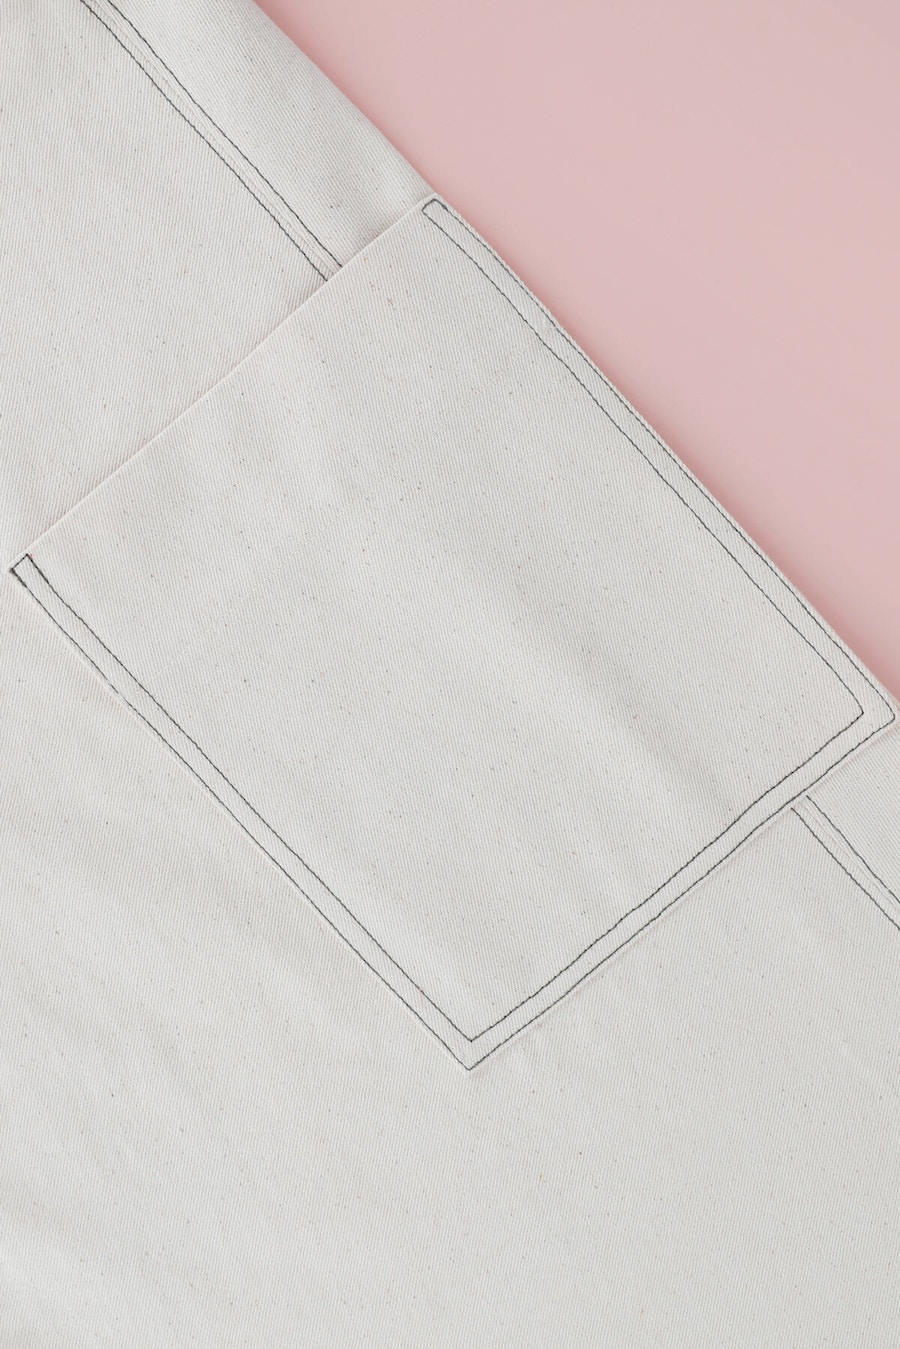 Pocket stitching Soften Studio Ora Pinafore Natural Upcycled Cotton